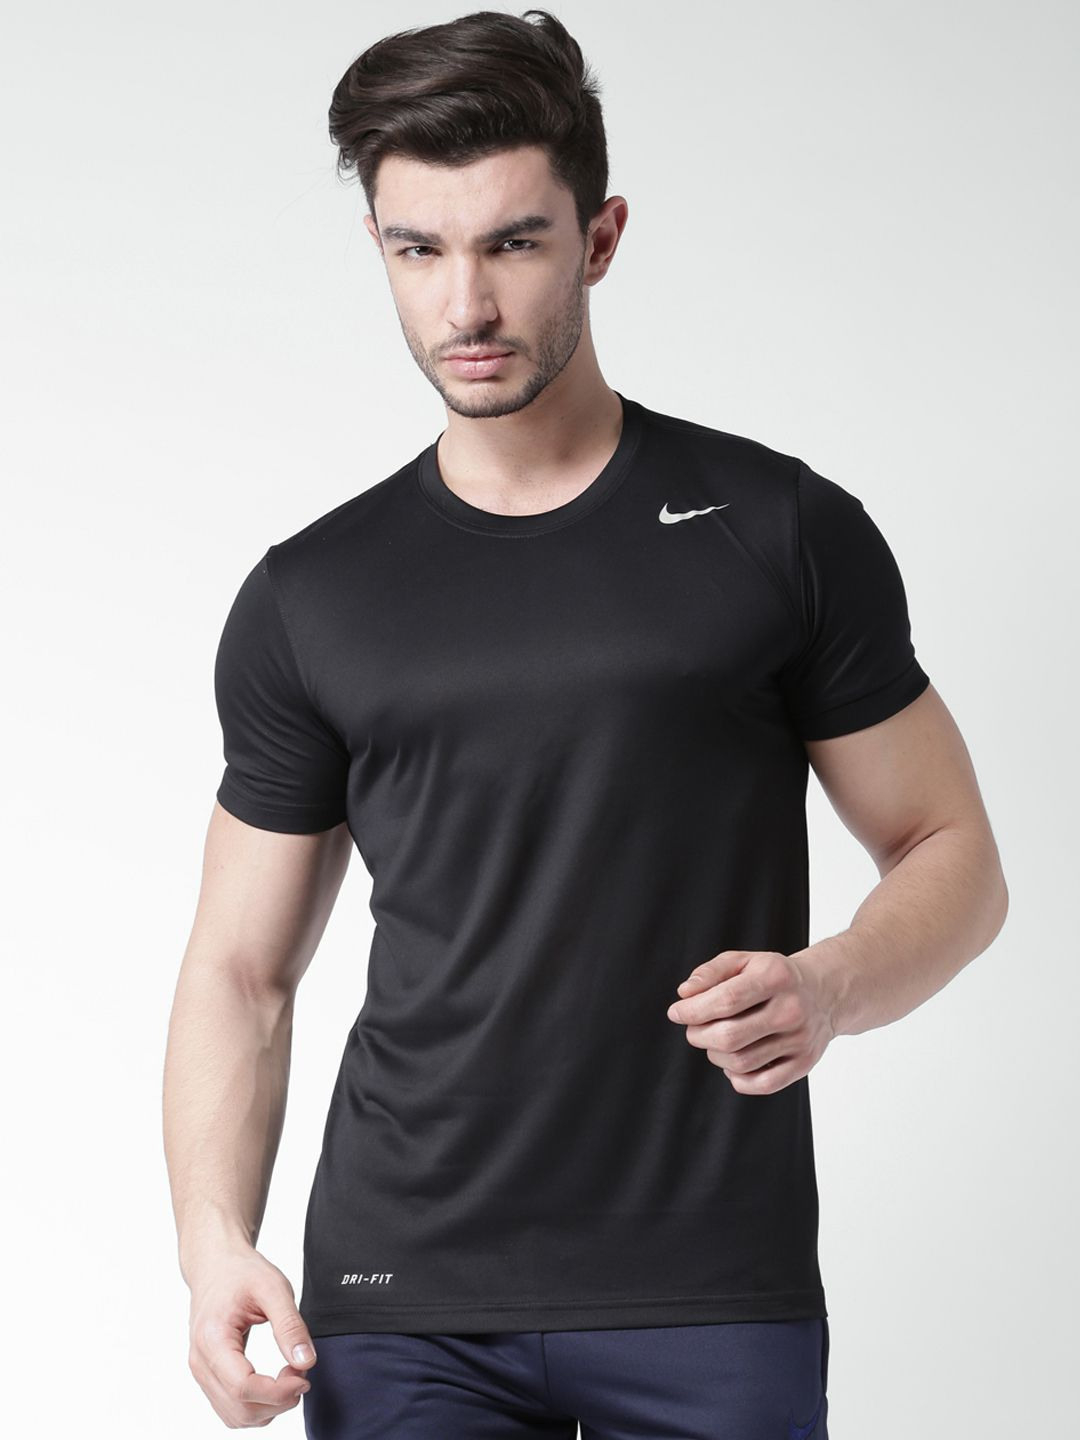 Nike Black Half Sleeve Tshirt  Buy Nike Black Half